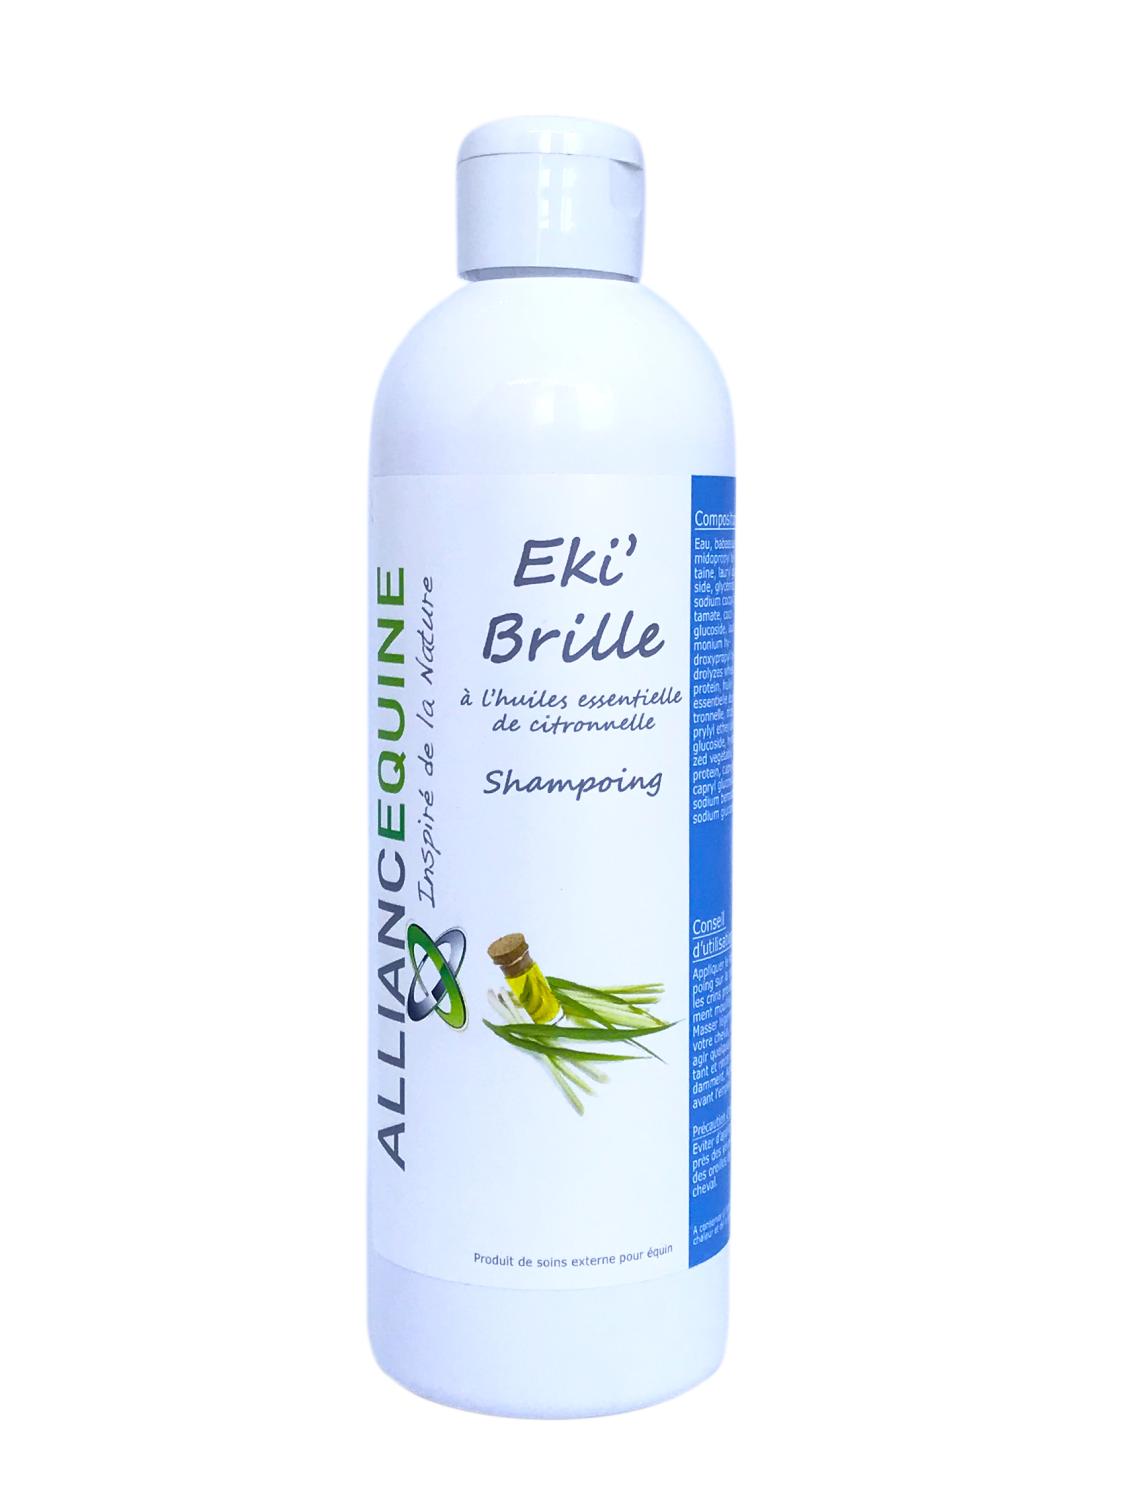 Eki'Brille (parfum citronnelle) 500 ml - ALLIANCE EQUINE